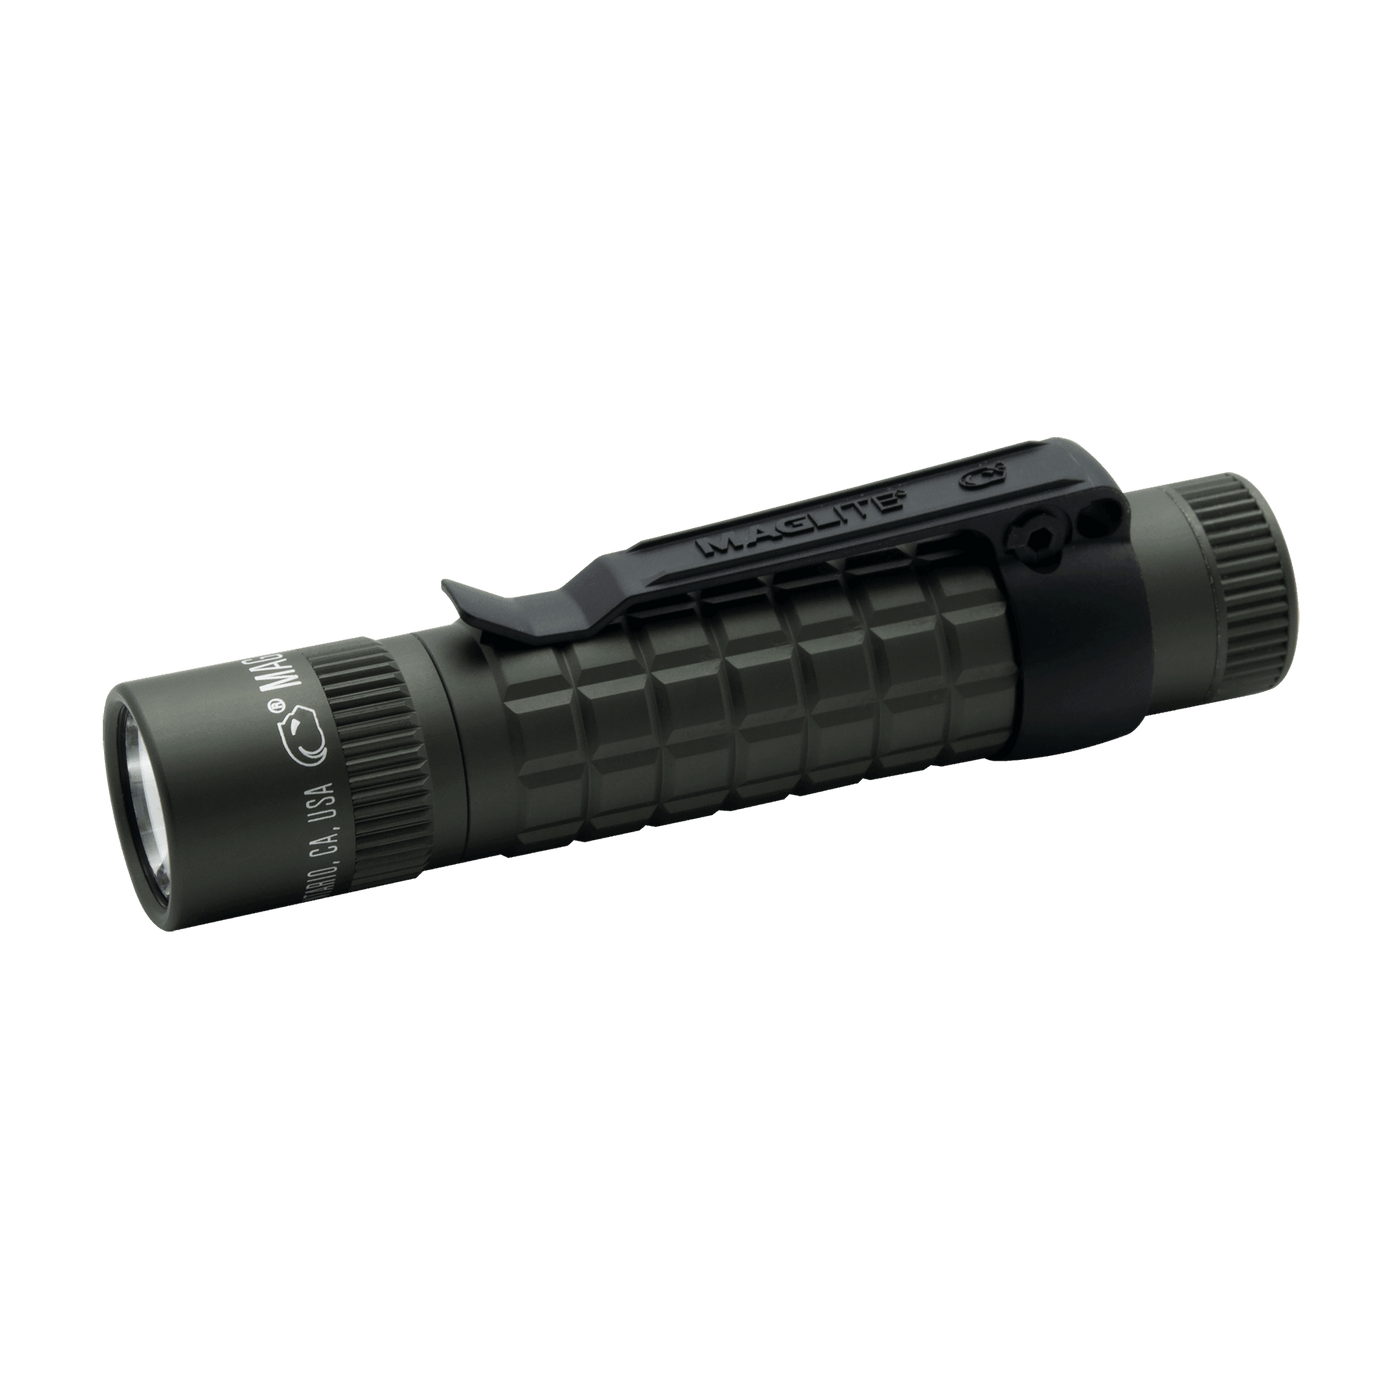 Maglite Mag-Tac CR123 LED Flashlight with Plain Bezel